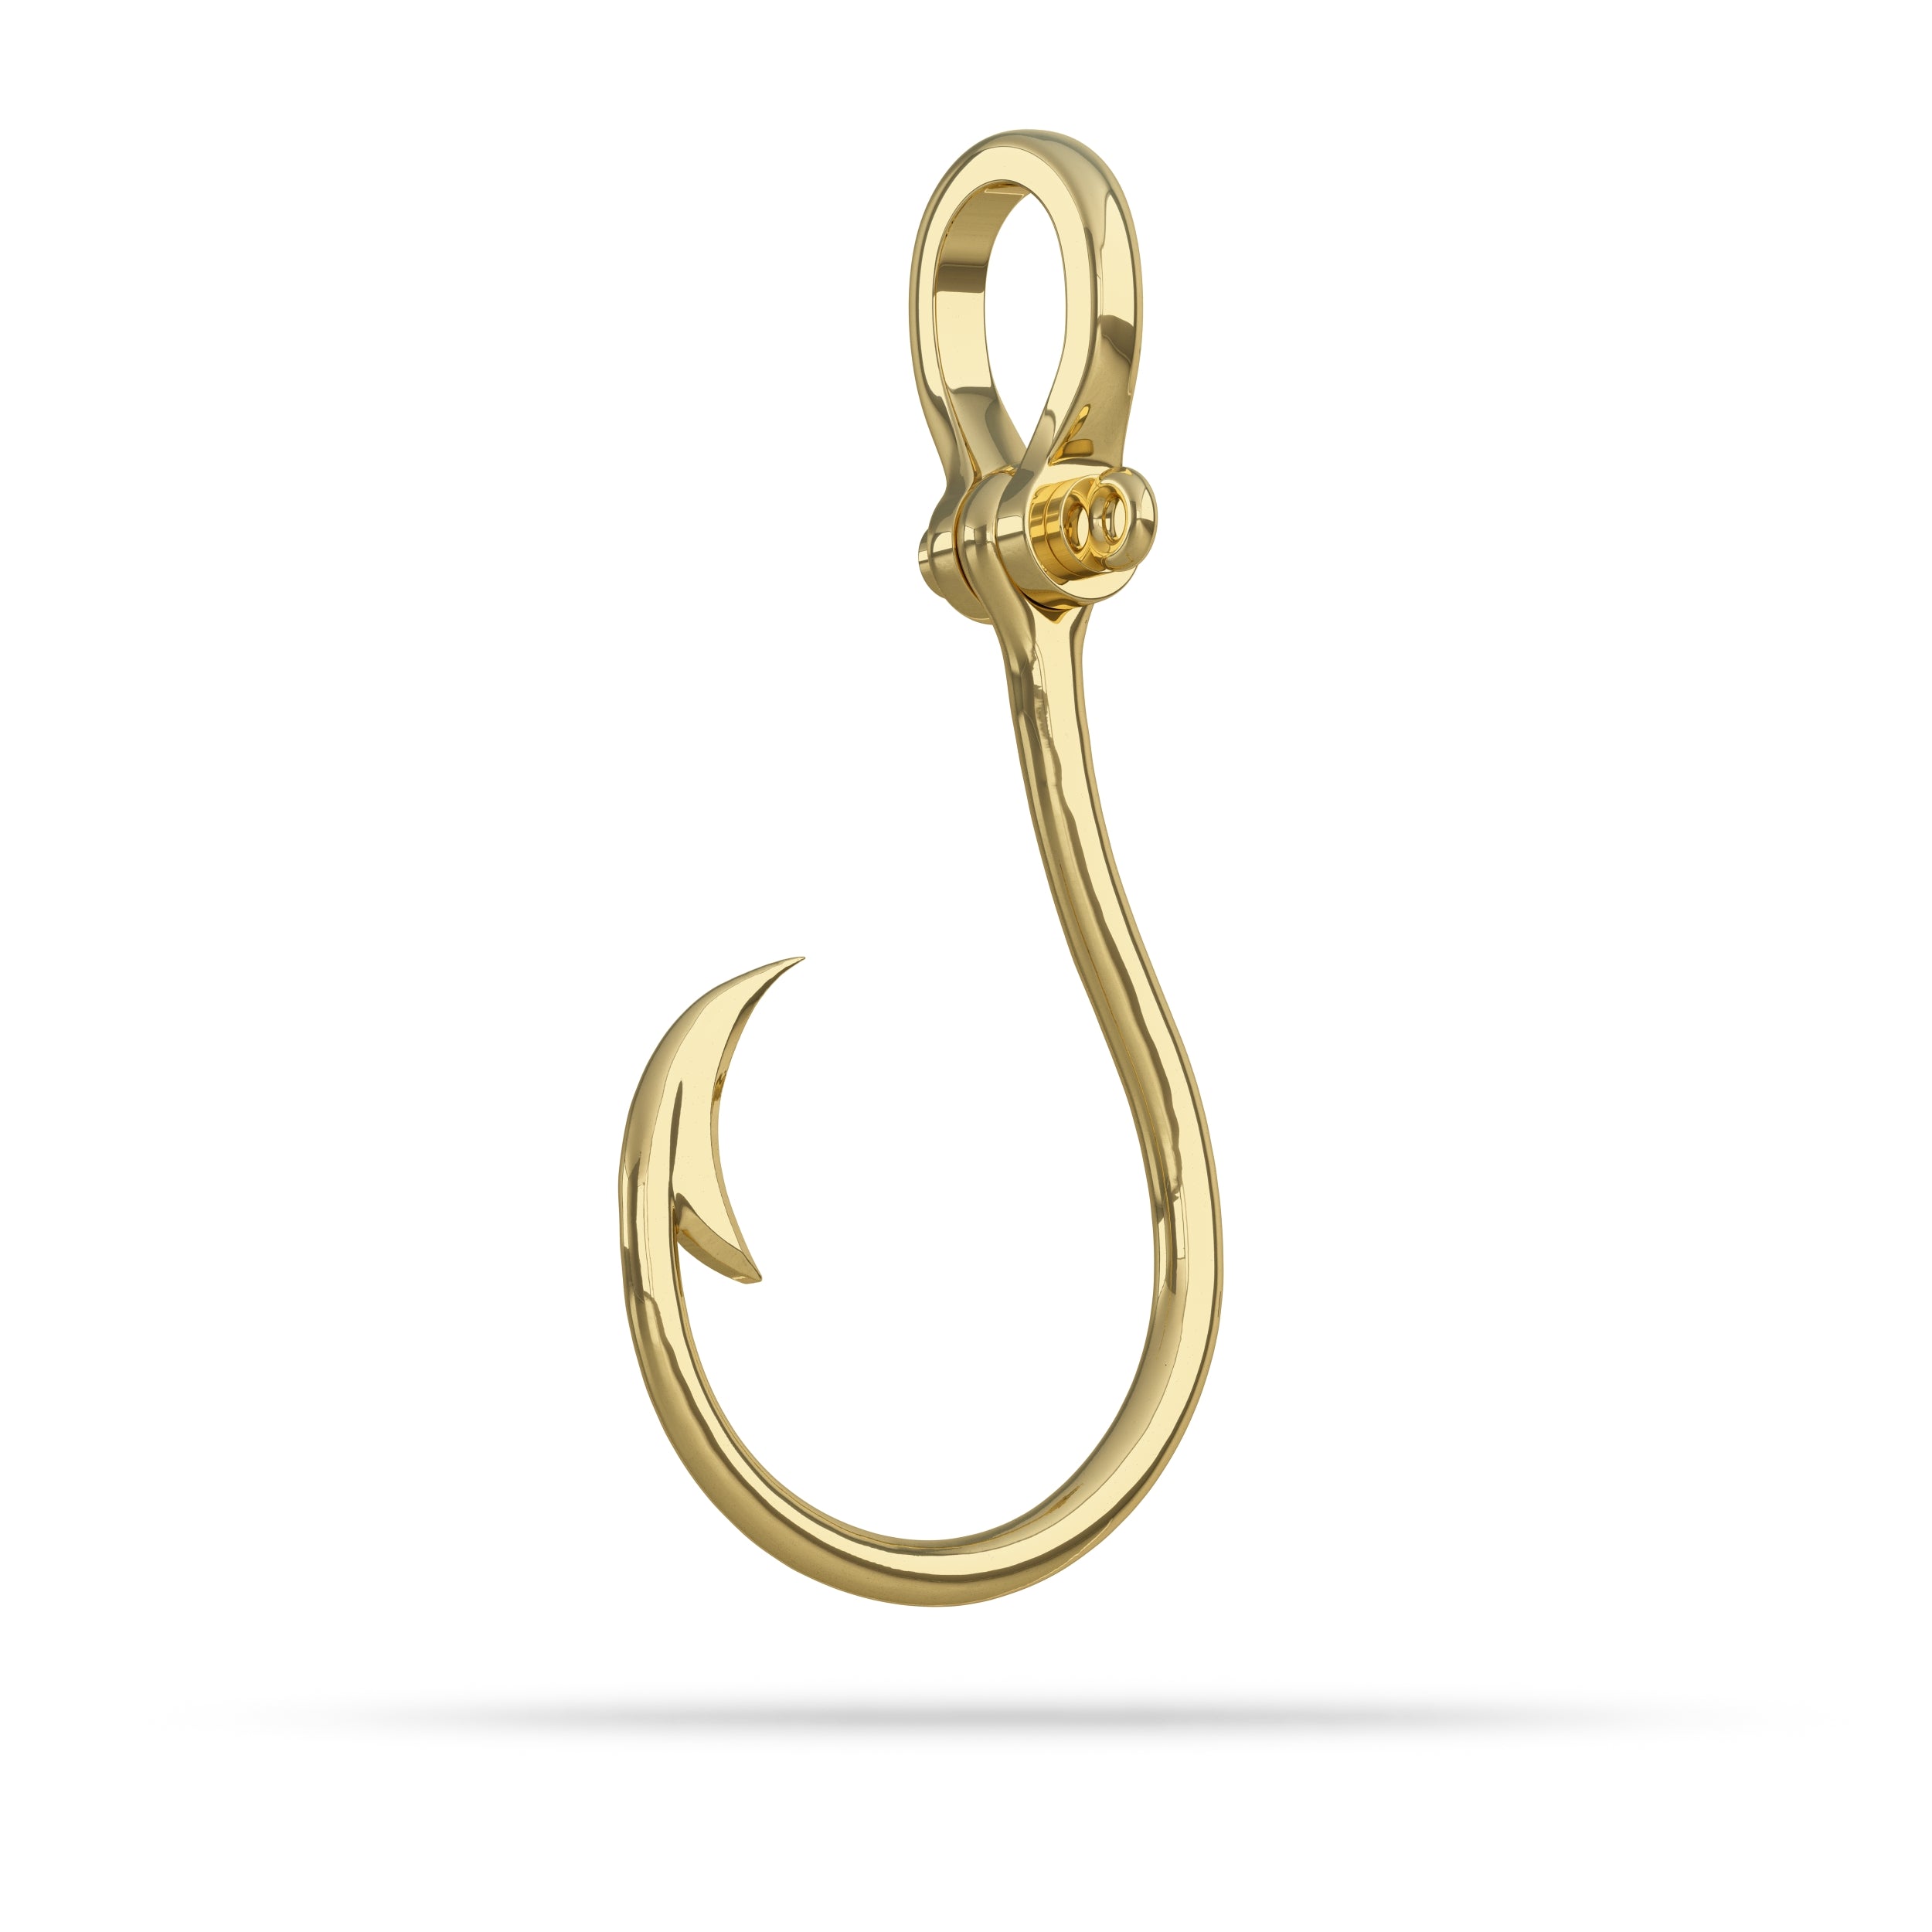 Medium Gold fishing hook pendant with Shackle Bail